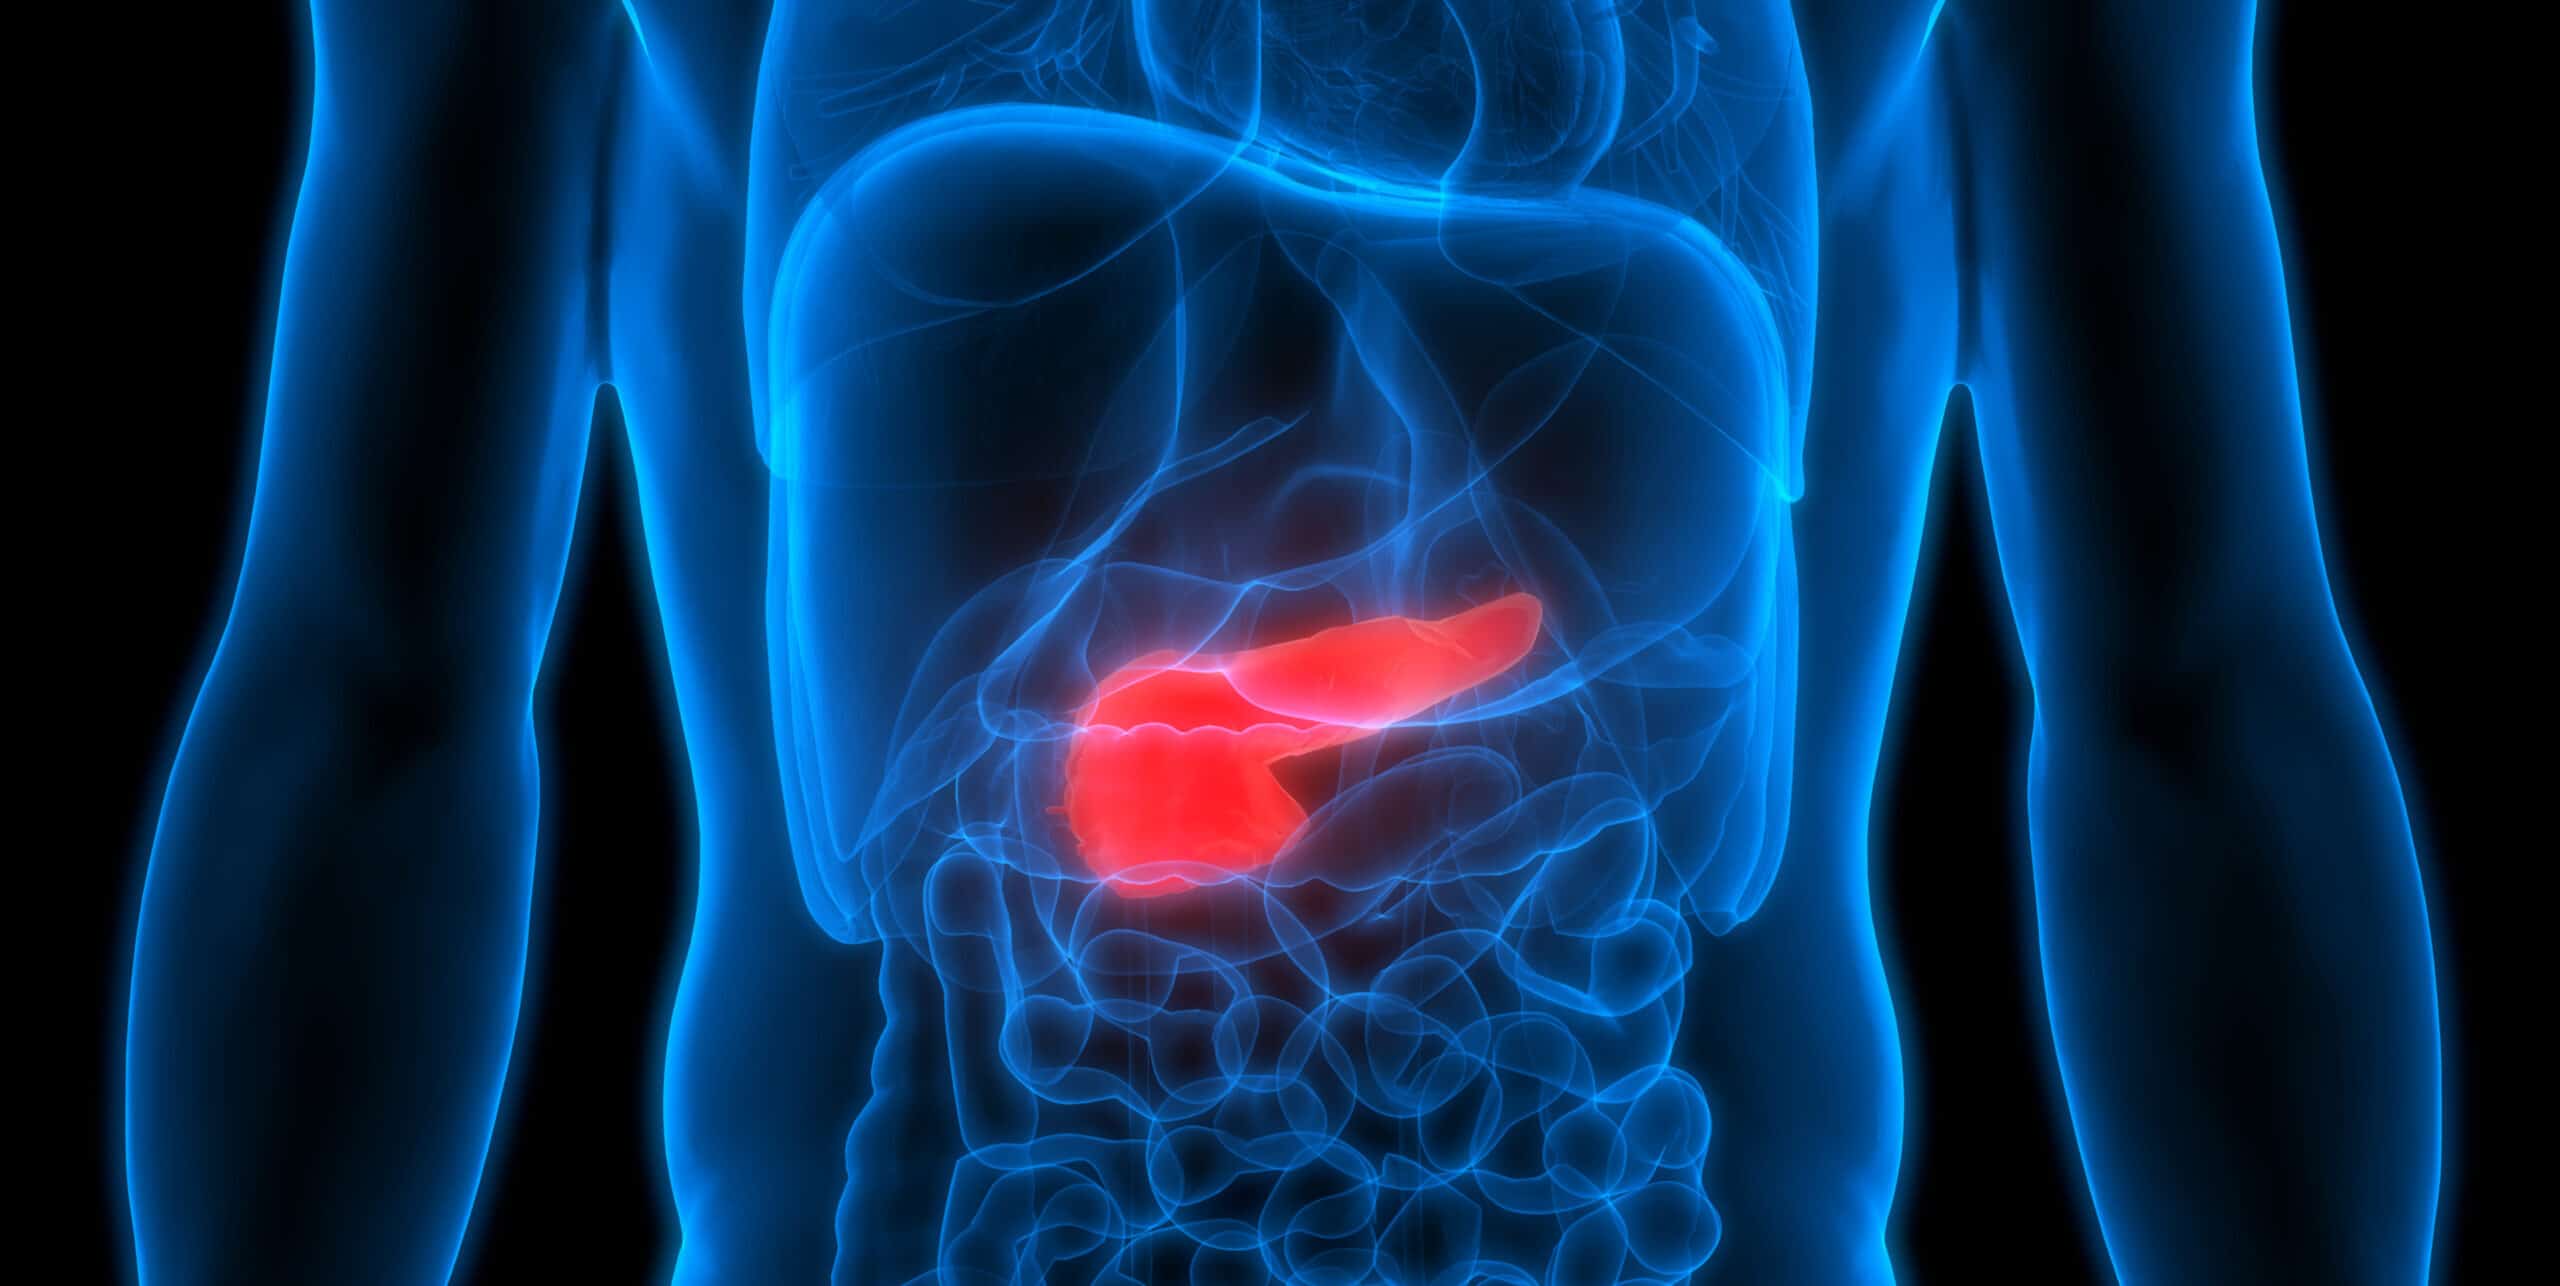 Human body with pancreas illuminated